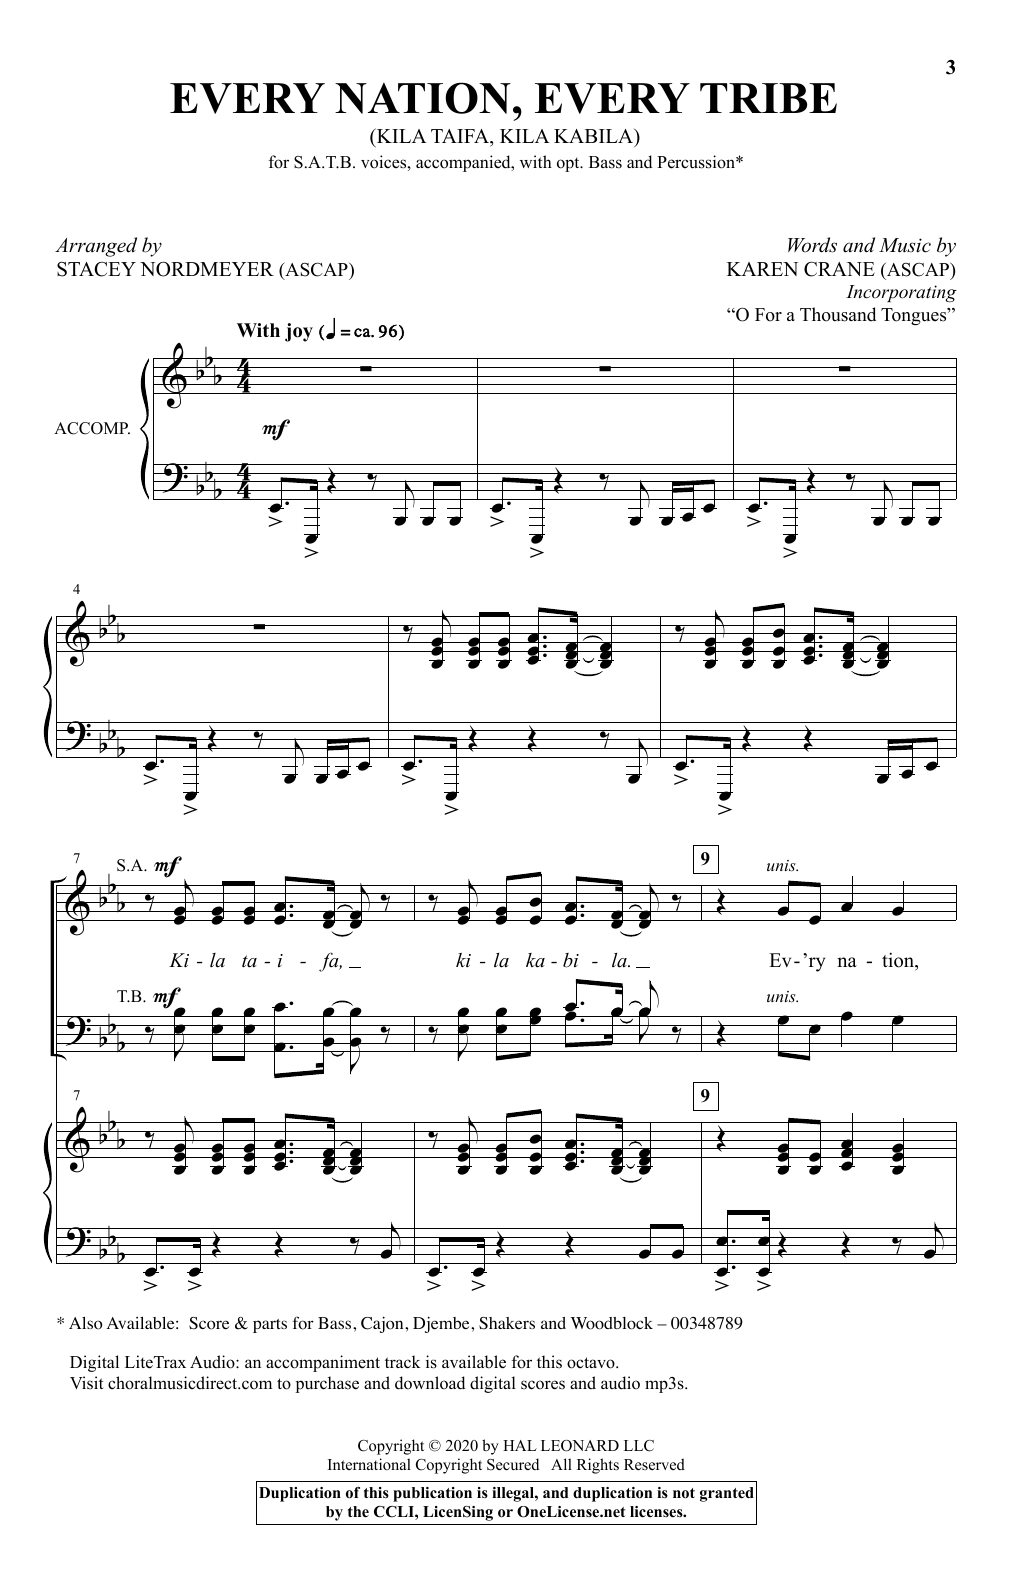 Karen Crane Every Nation, Every Tribe (Ki La Taifa, Kila Kabila) (arr. Stacey Nordmeyer) Sheet Music Notes & Chords for SATB Choir - Download or Print PDF